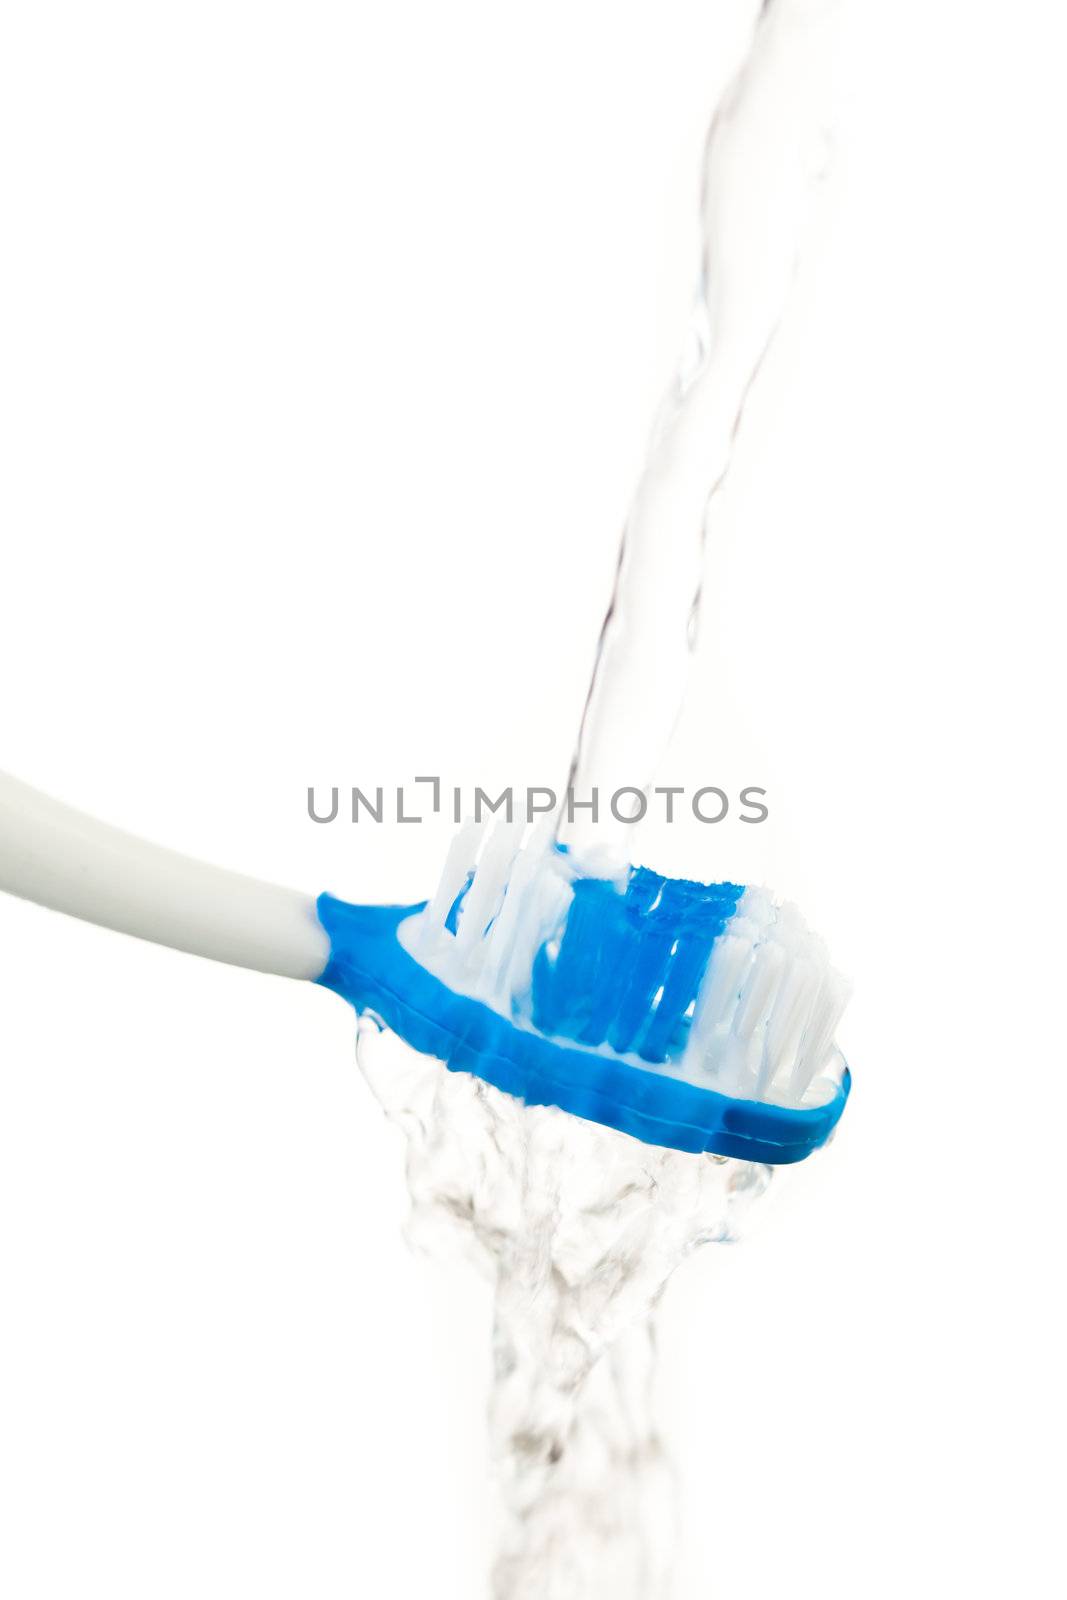 Water flowing on a toothbrush by Wavebreakmedia